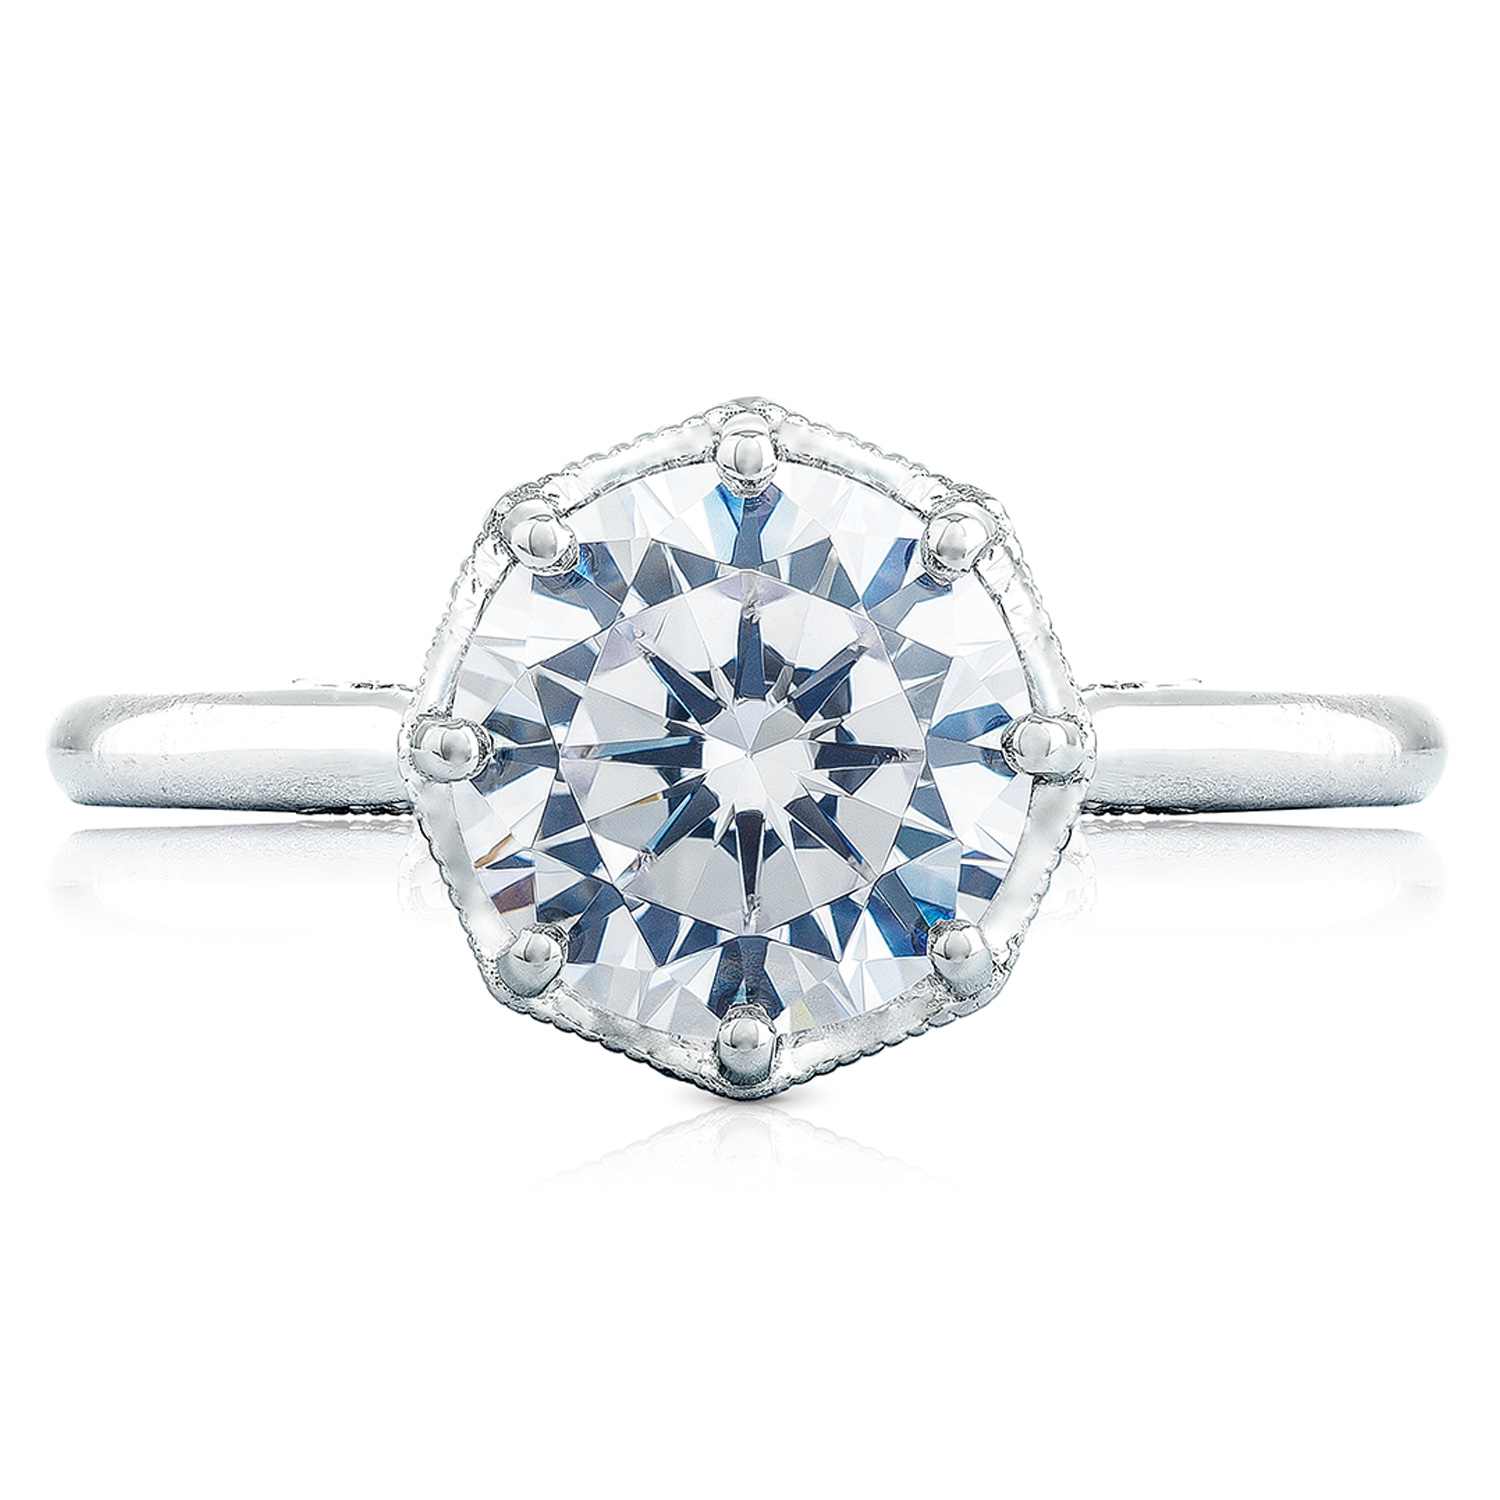 2652RD8 Platinum Simply Tacori Engagement Ring